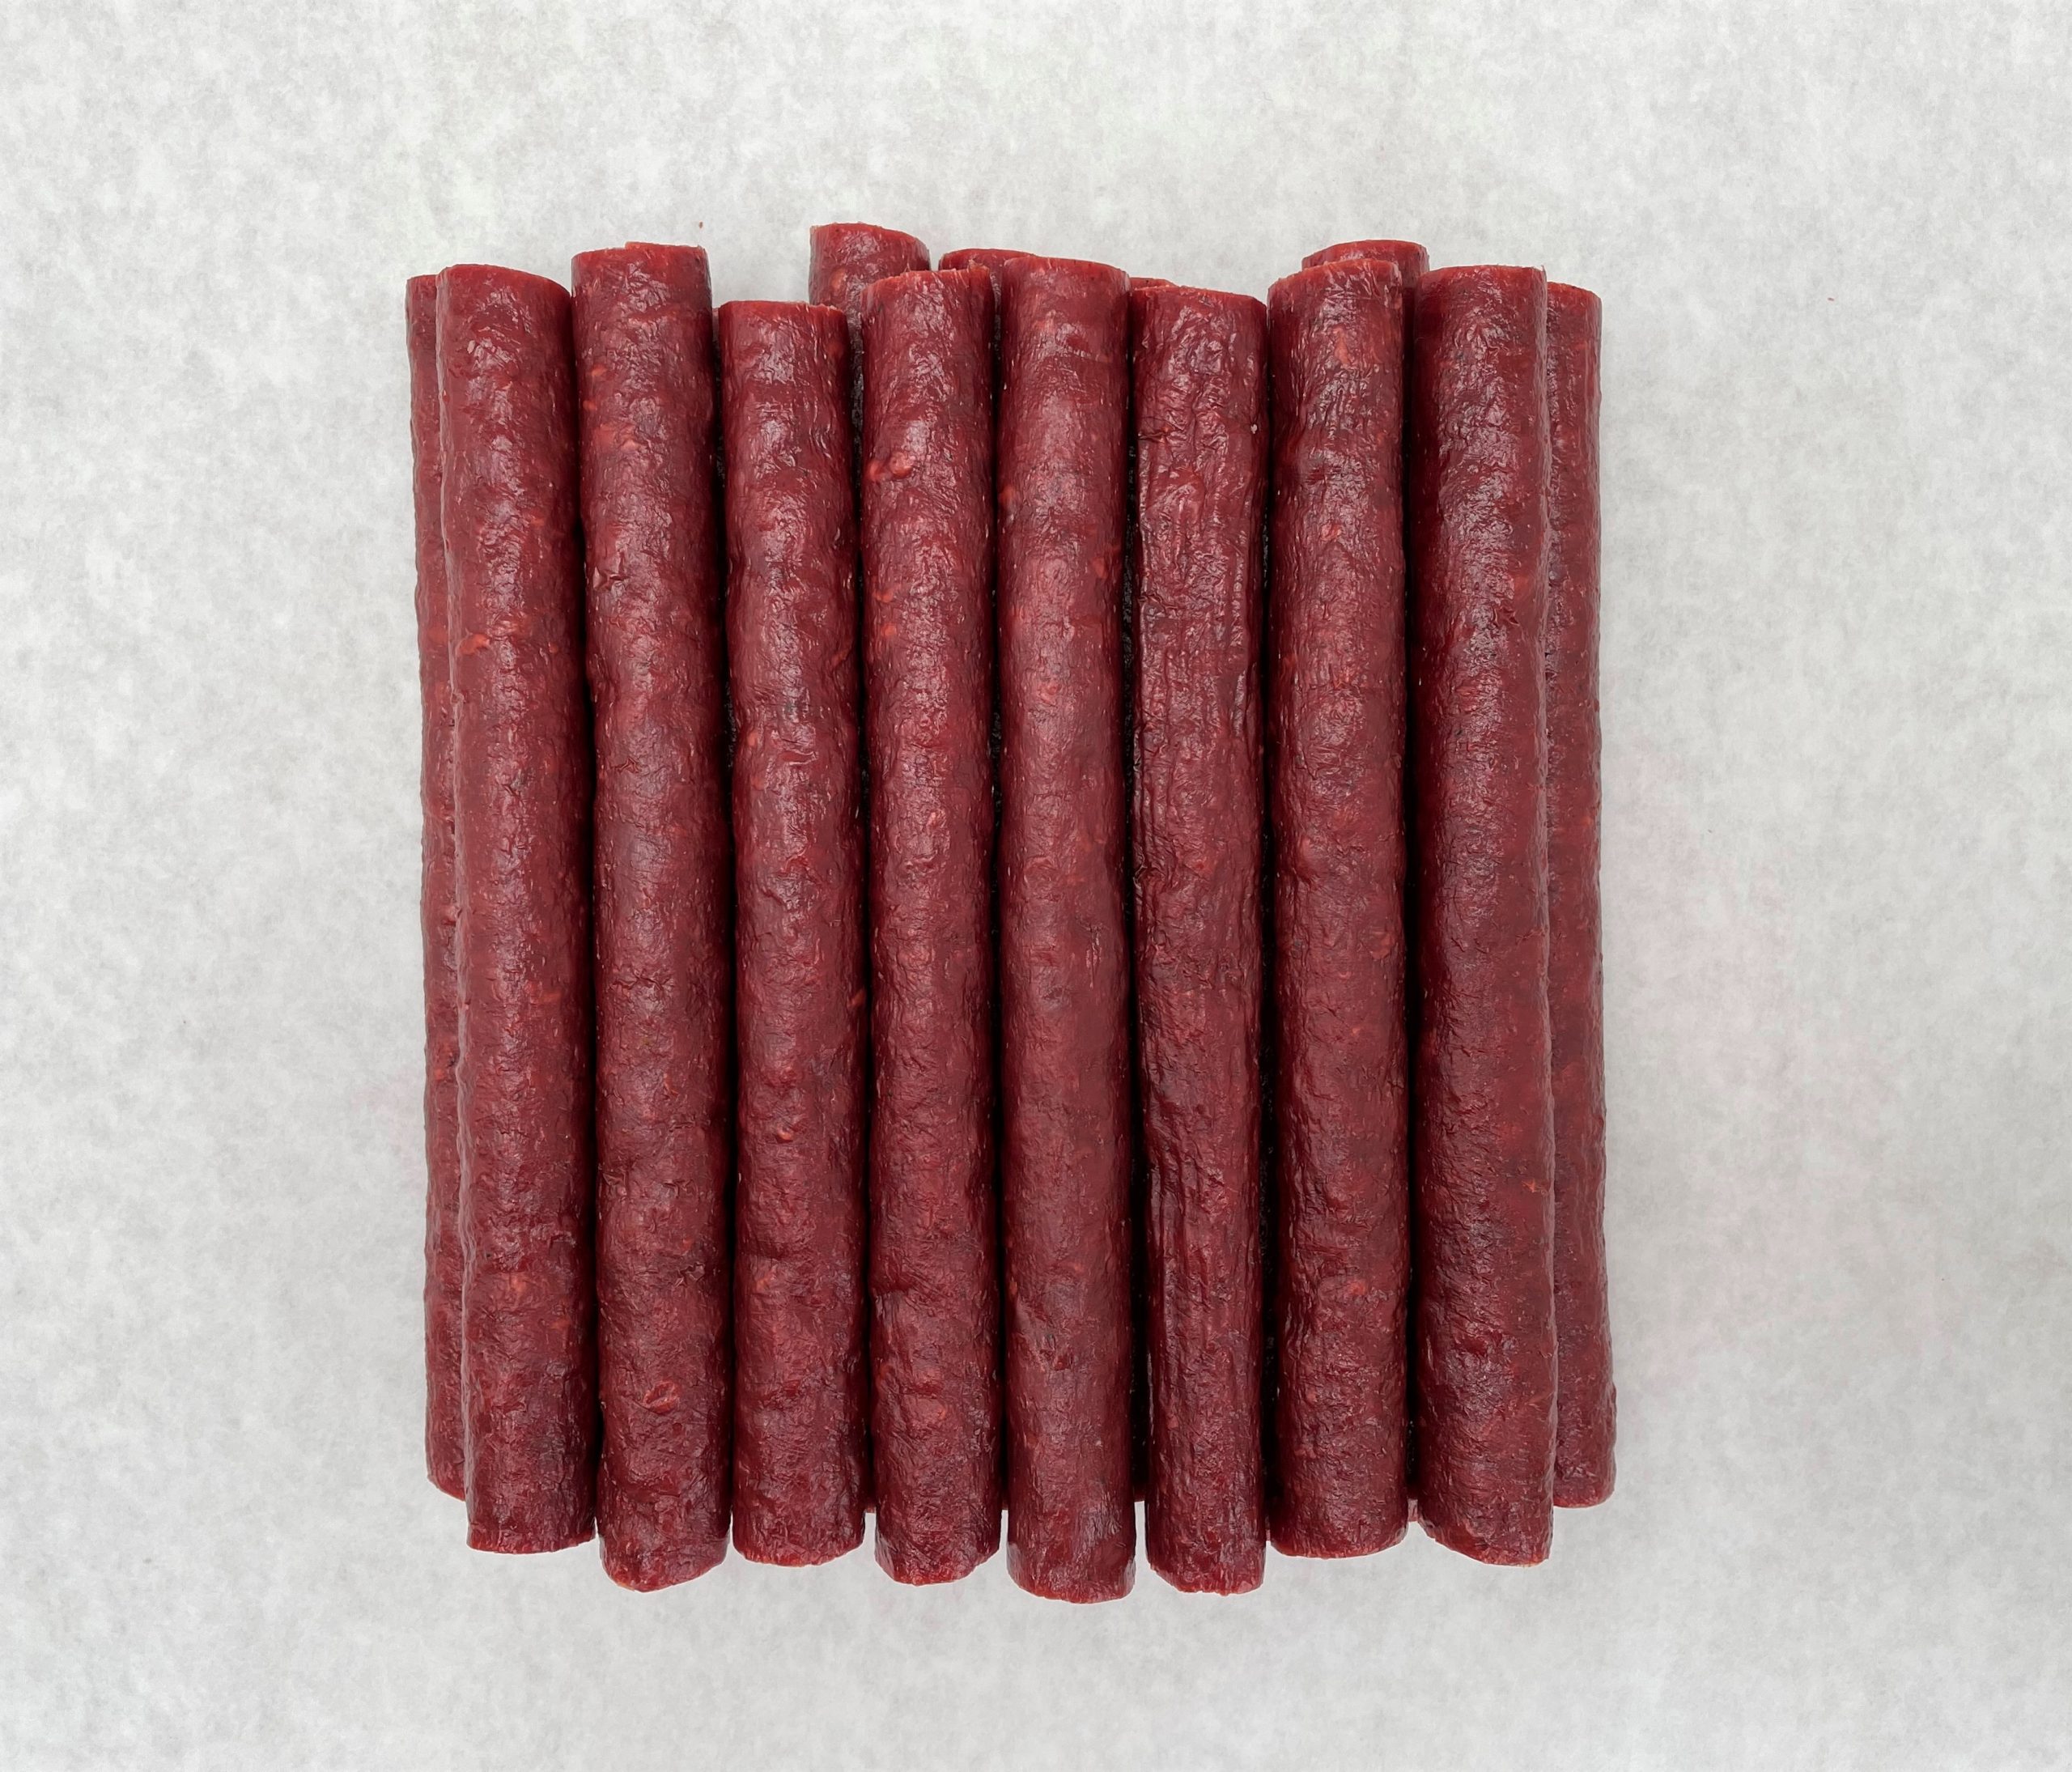 Beef Sticks (2.5# package)